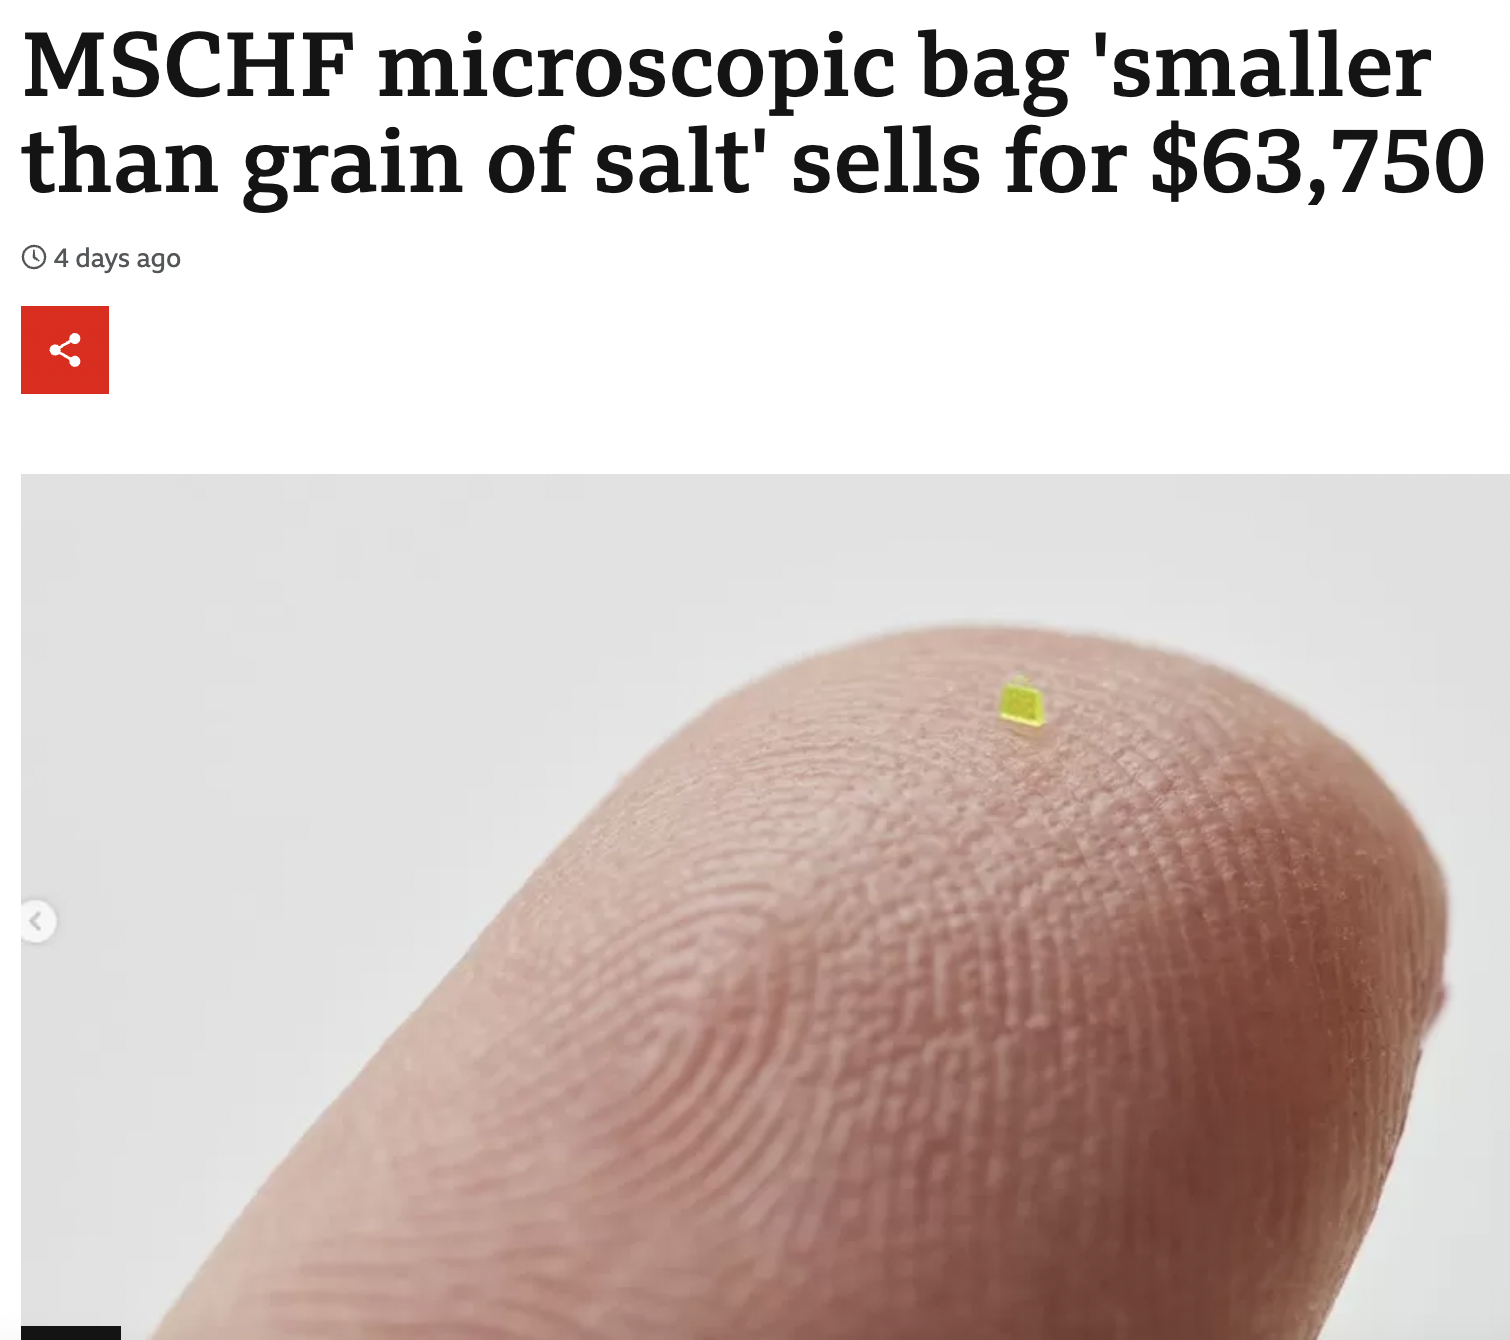 Microscopic bag smaller than salt grain sells for almost $100,000